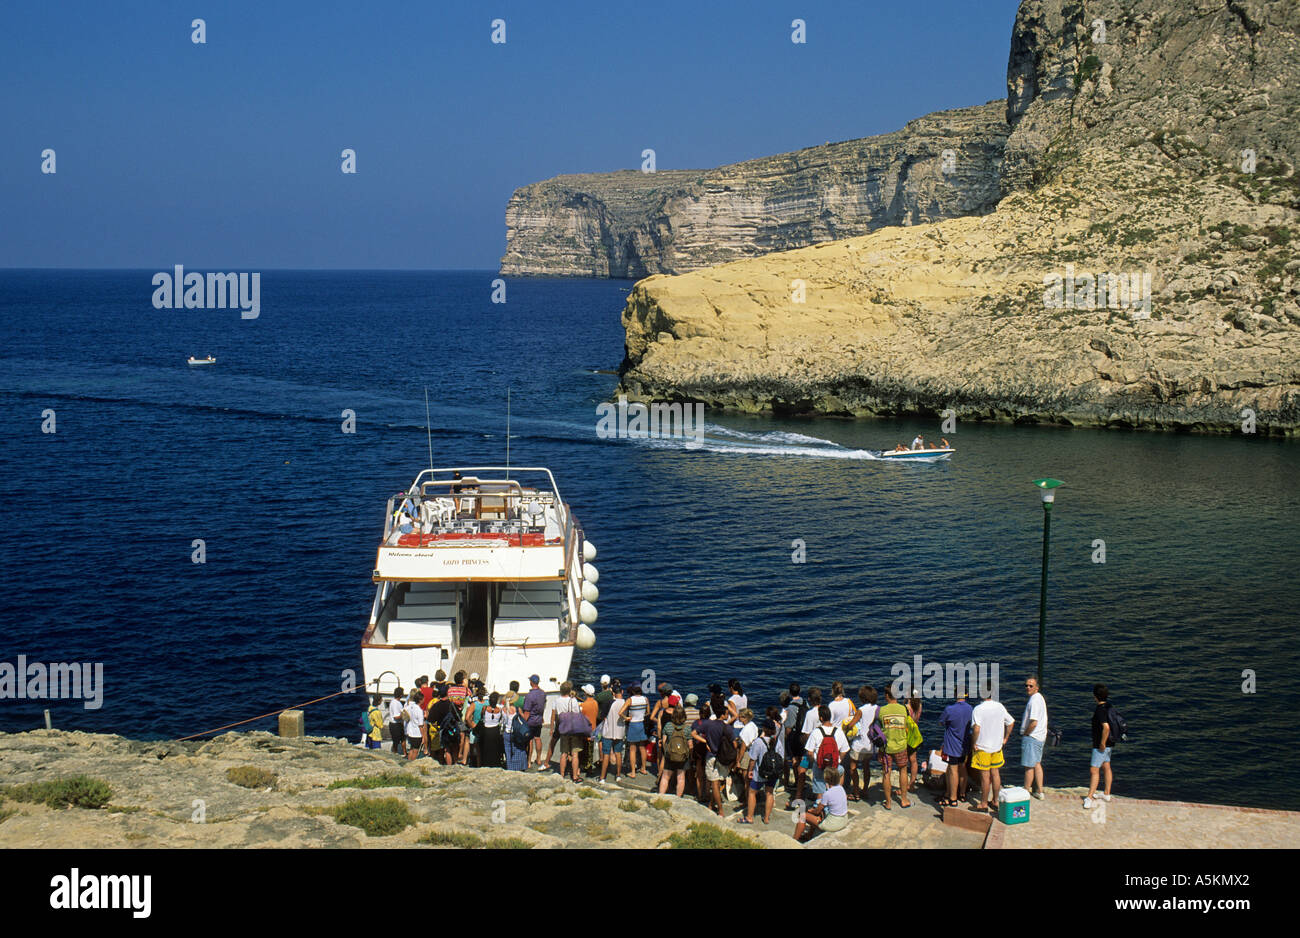 Tourists boarding a sightseeing boat at Xlendi Bay, Gozo island, Malta Stock Photo